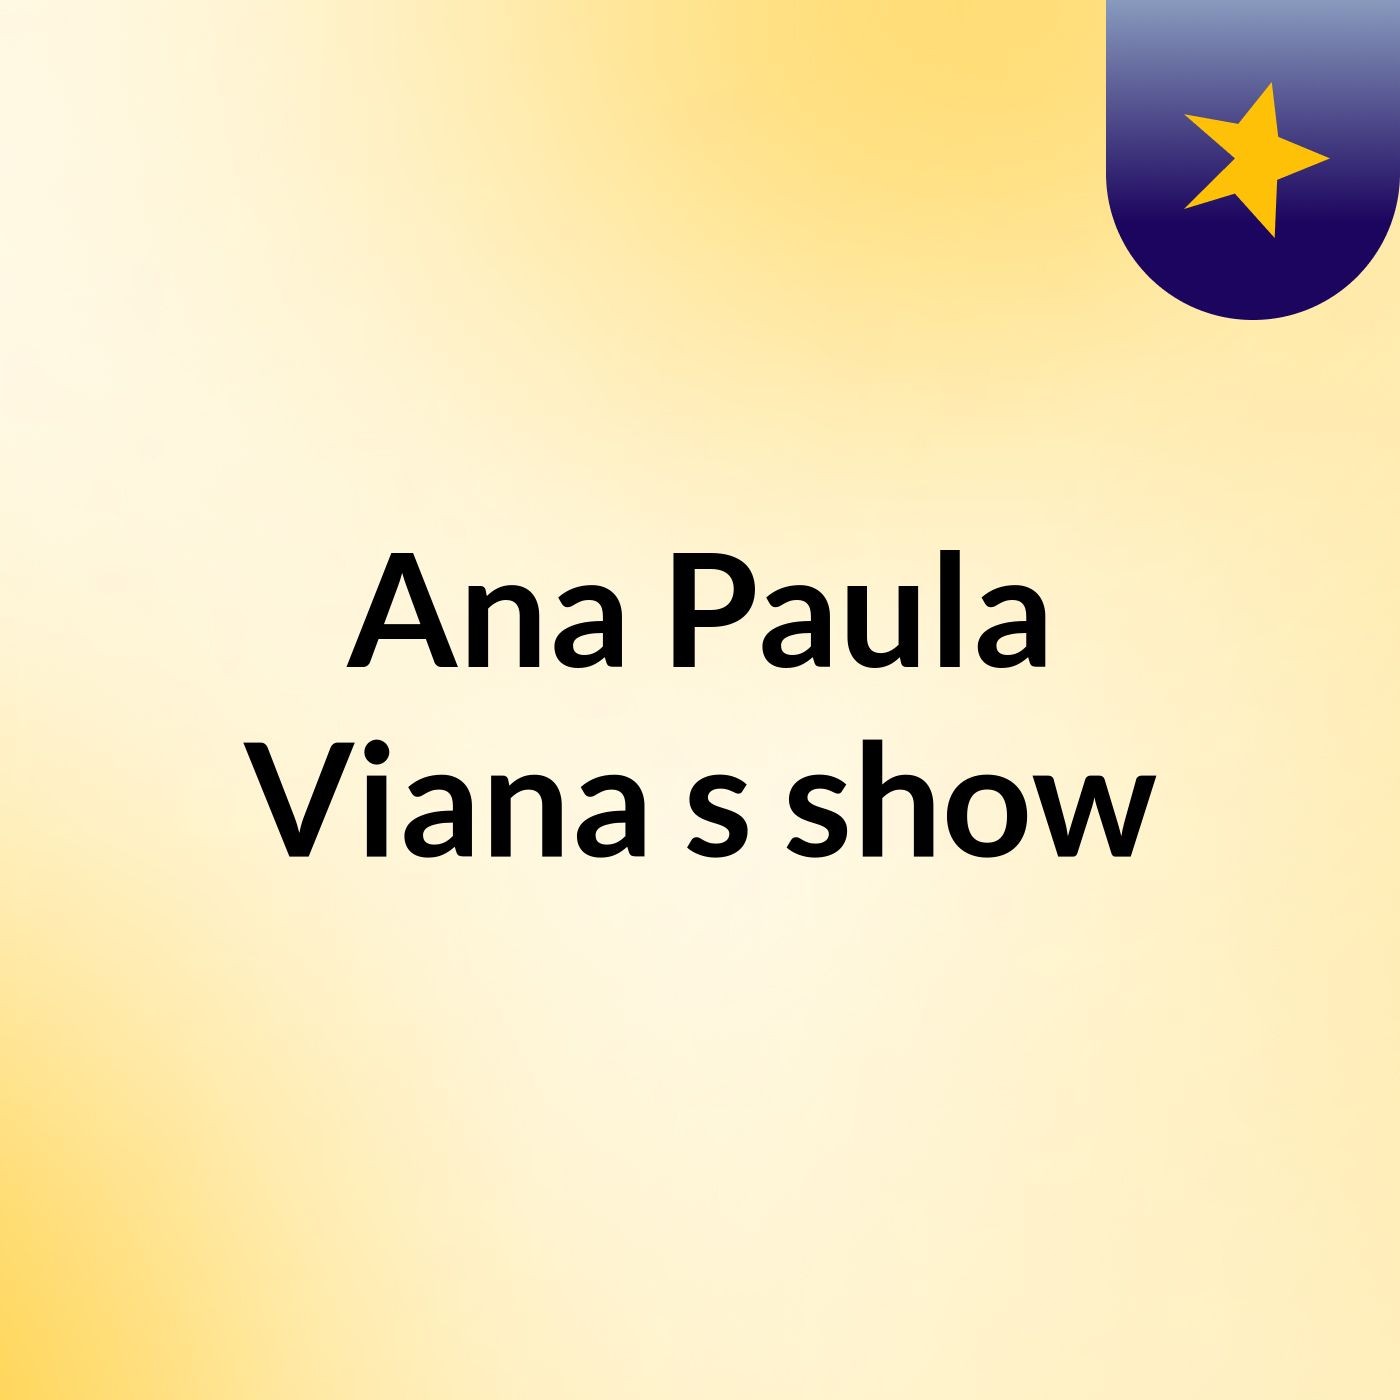 Ana Paula Viana's show